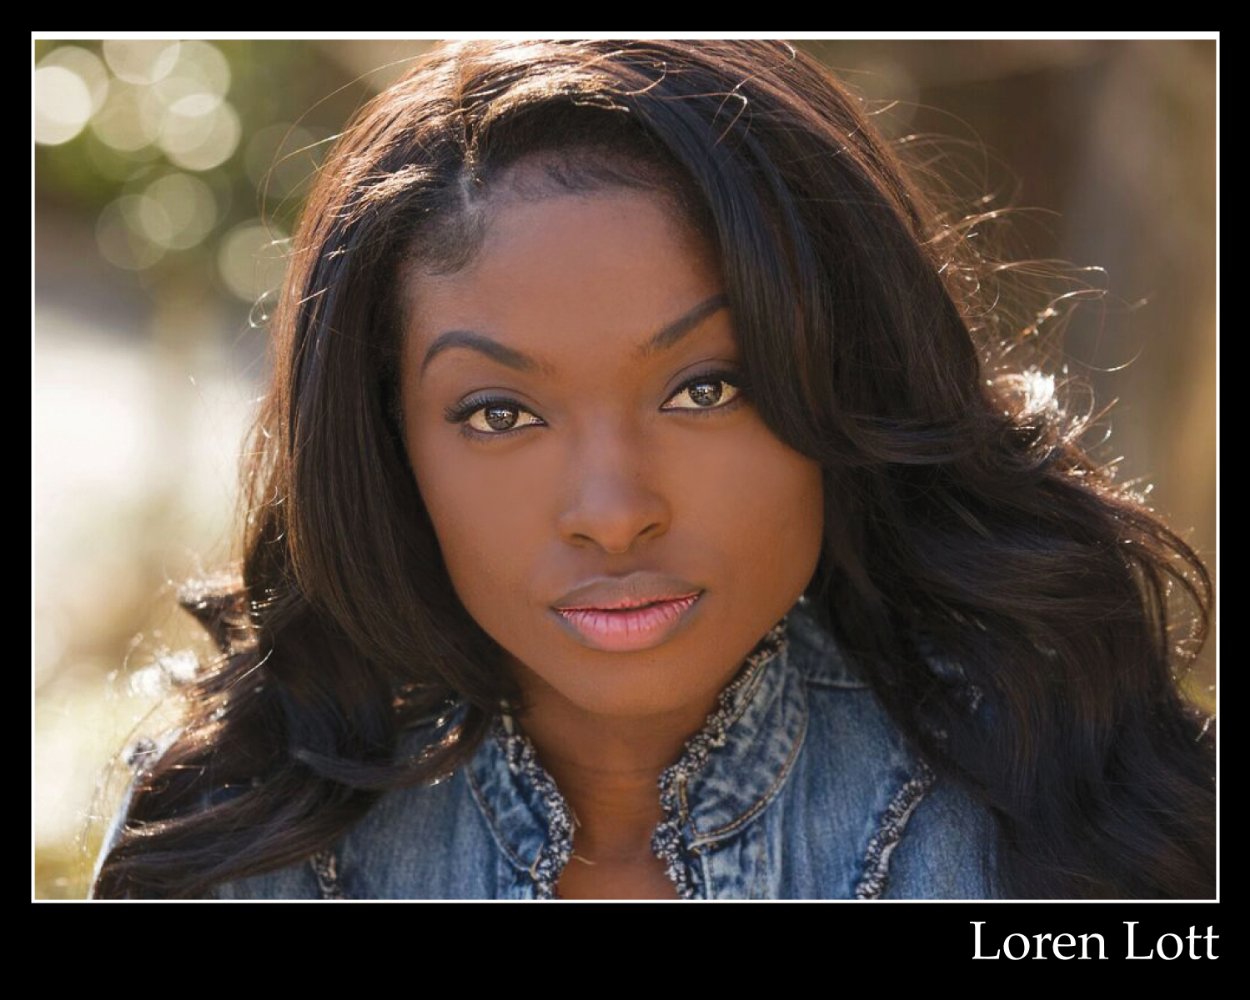 Loren Lott